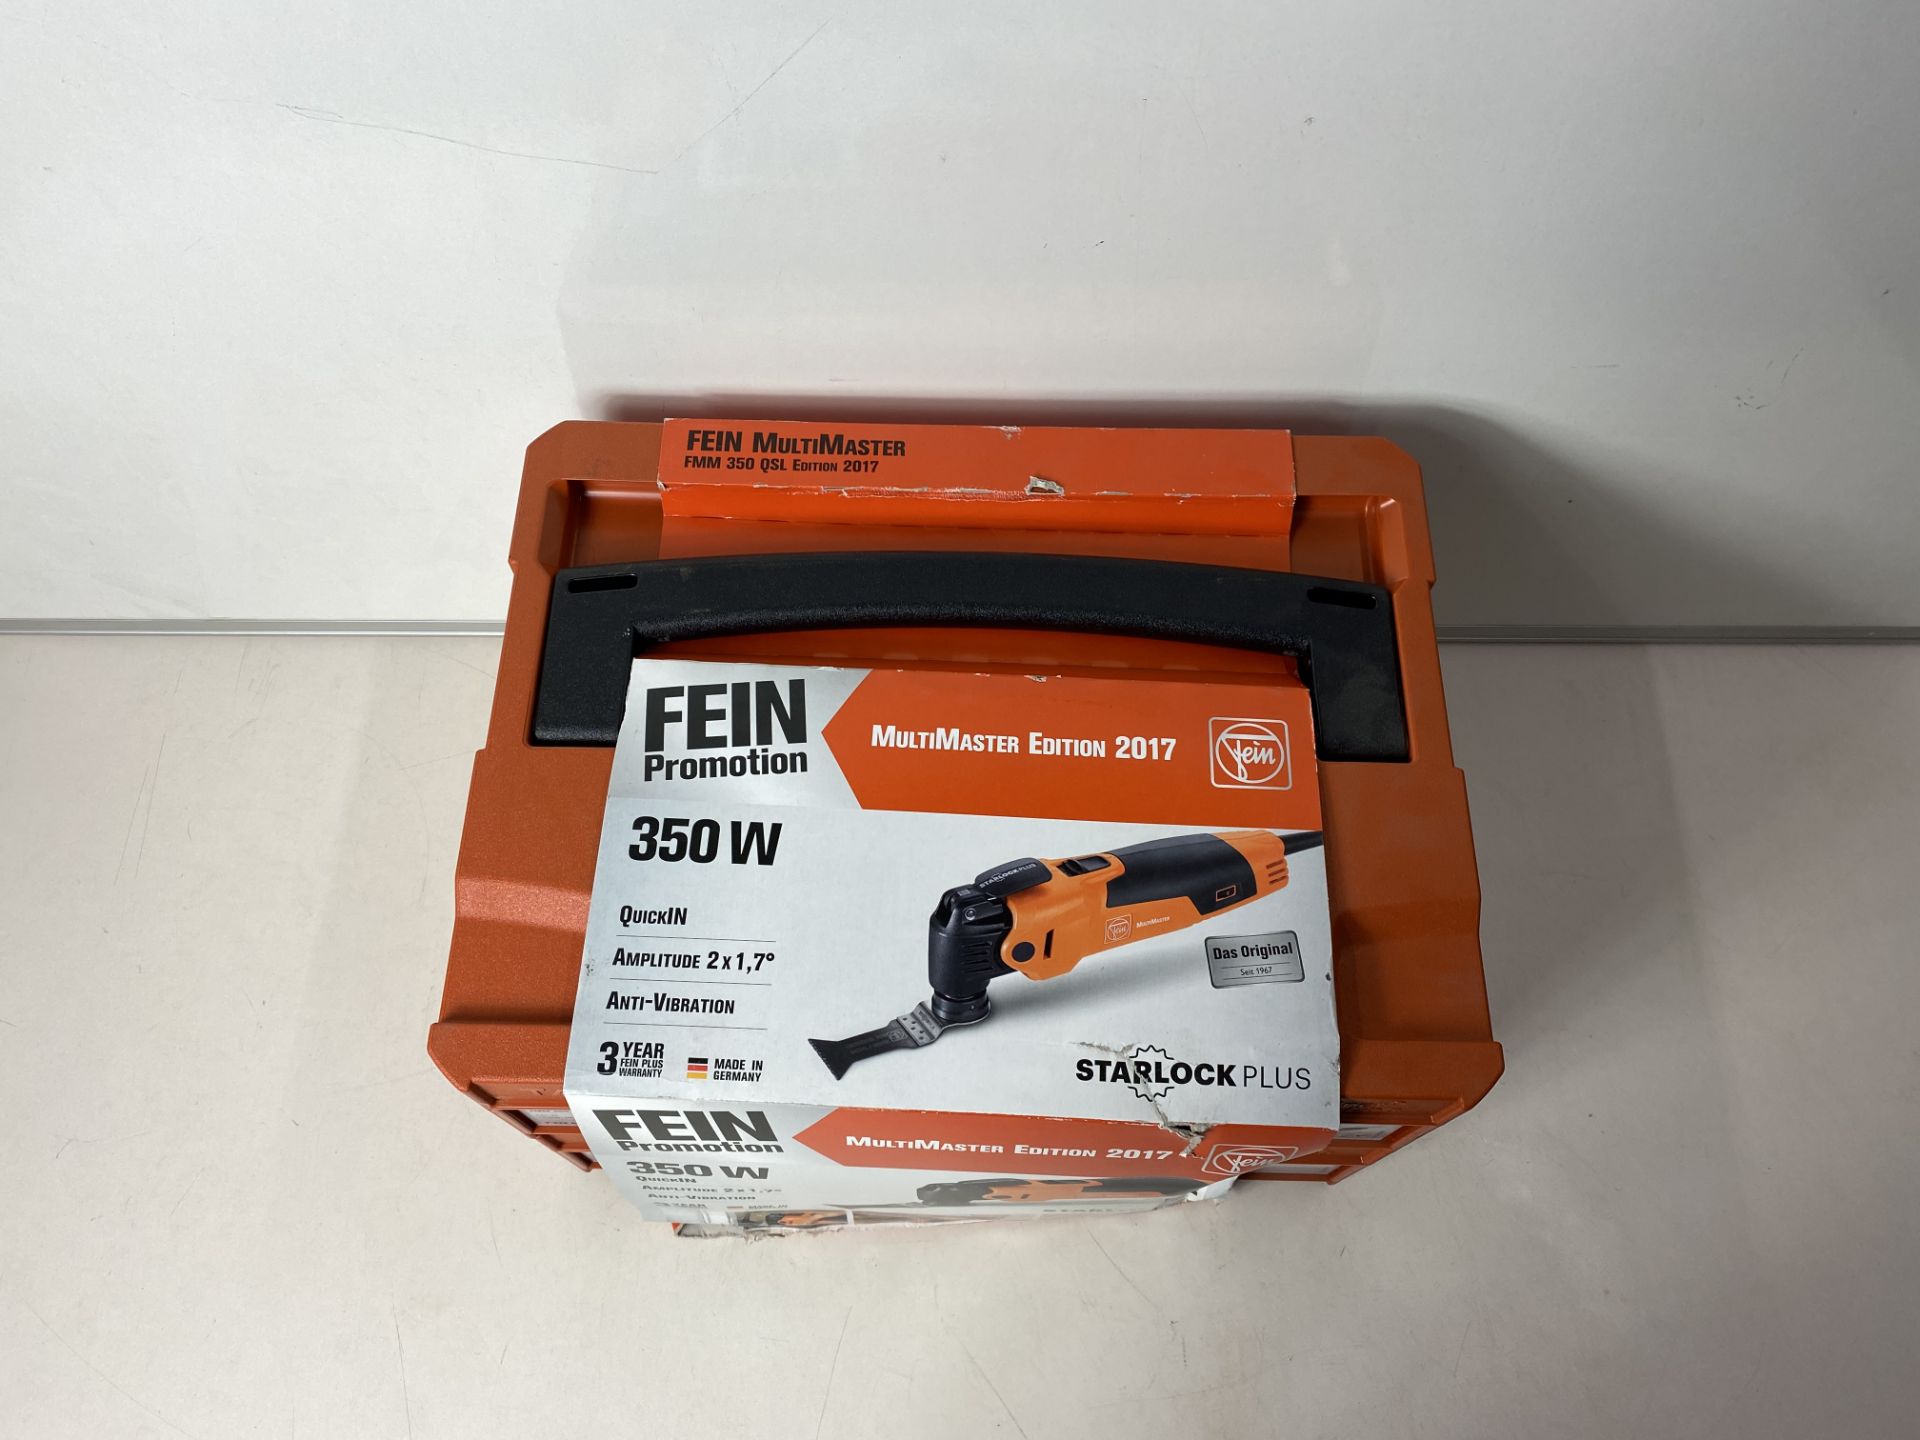 FEIN FMM35QSL N24 50H Edition 2017 Multi-Master, 110 V, Orange - Image 2 of 8